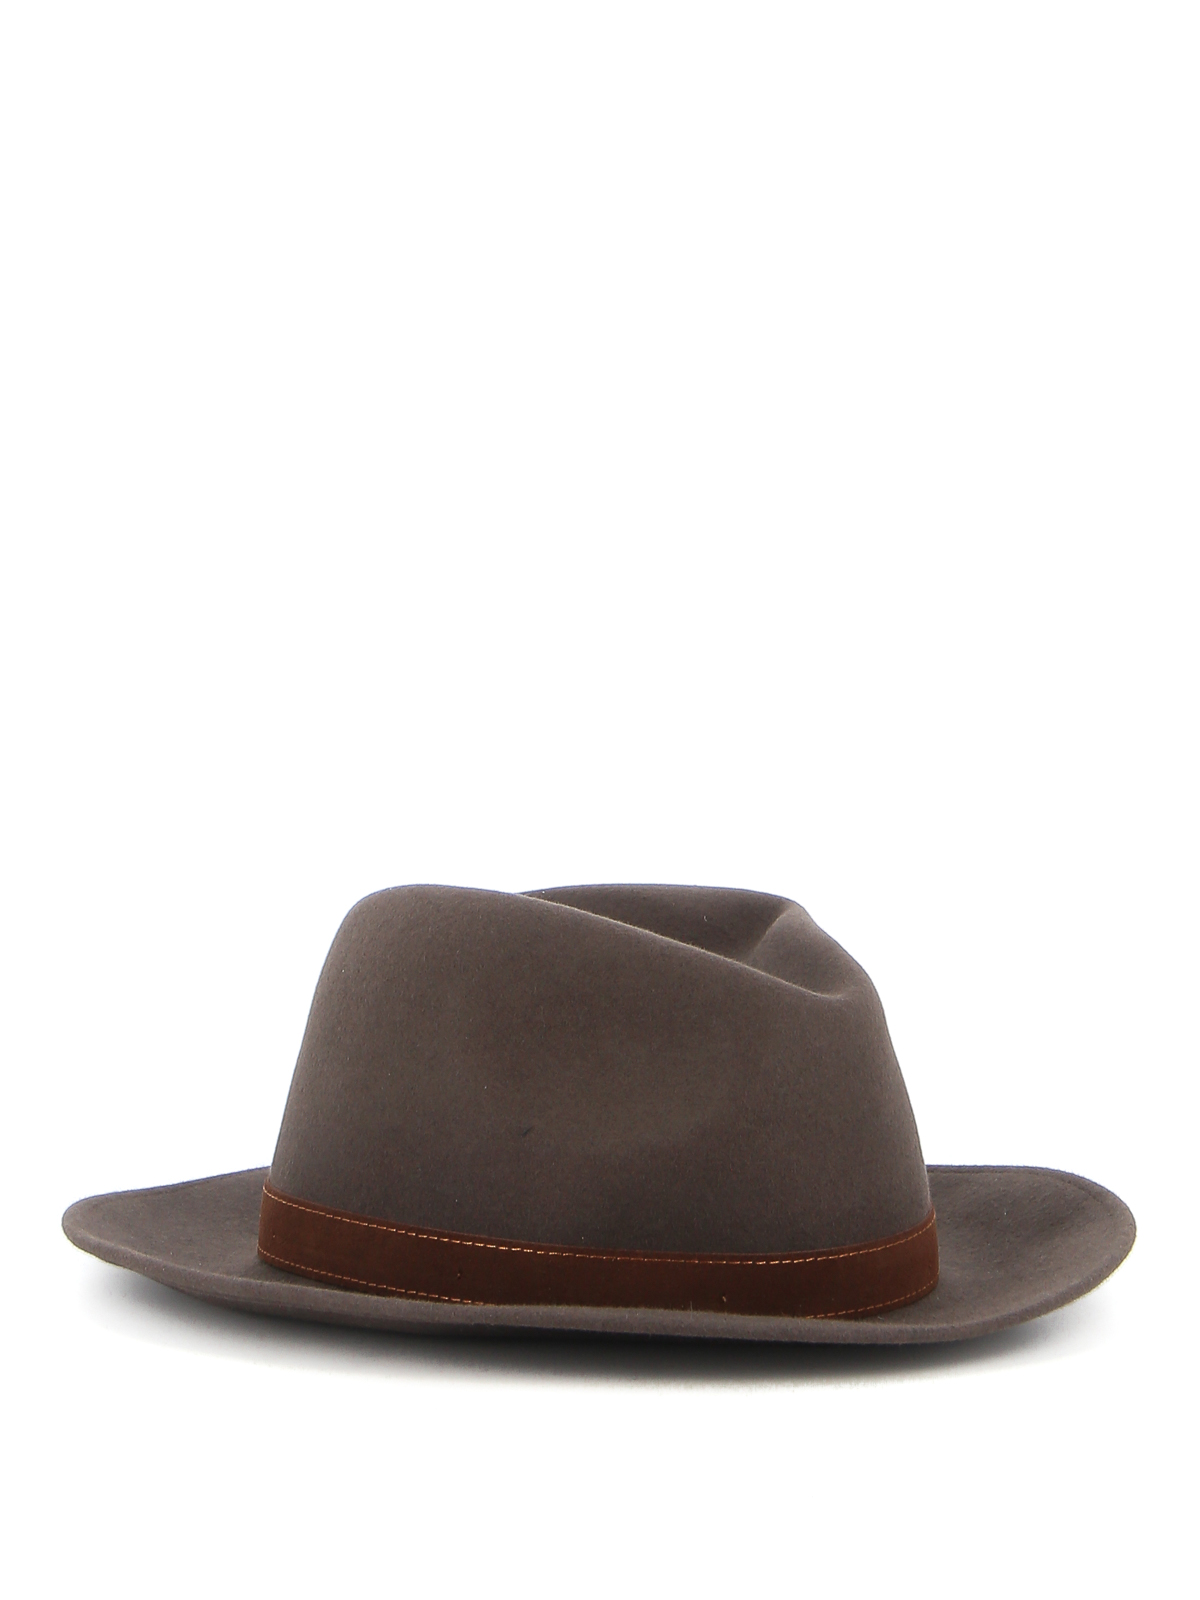 Hats & caps Borsalino - Country Alessandria fedora hat - 3900600340